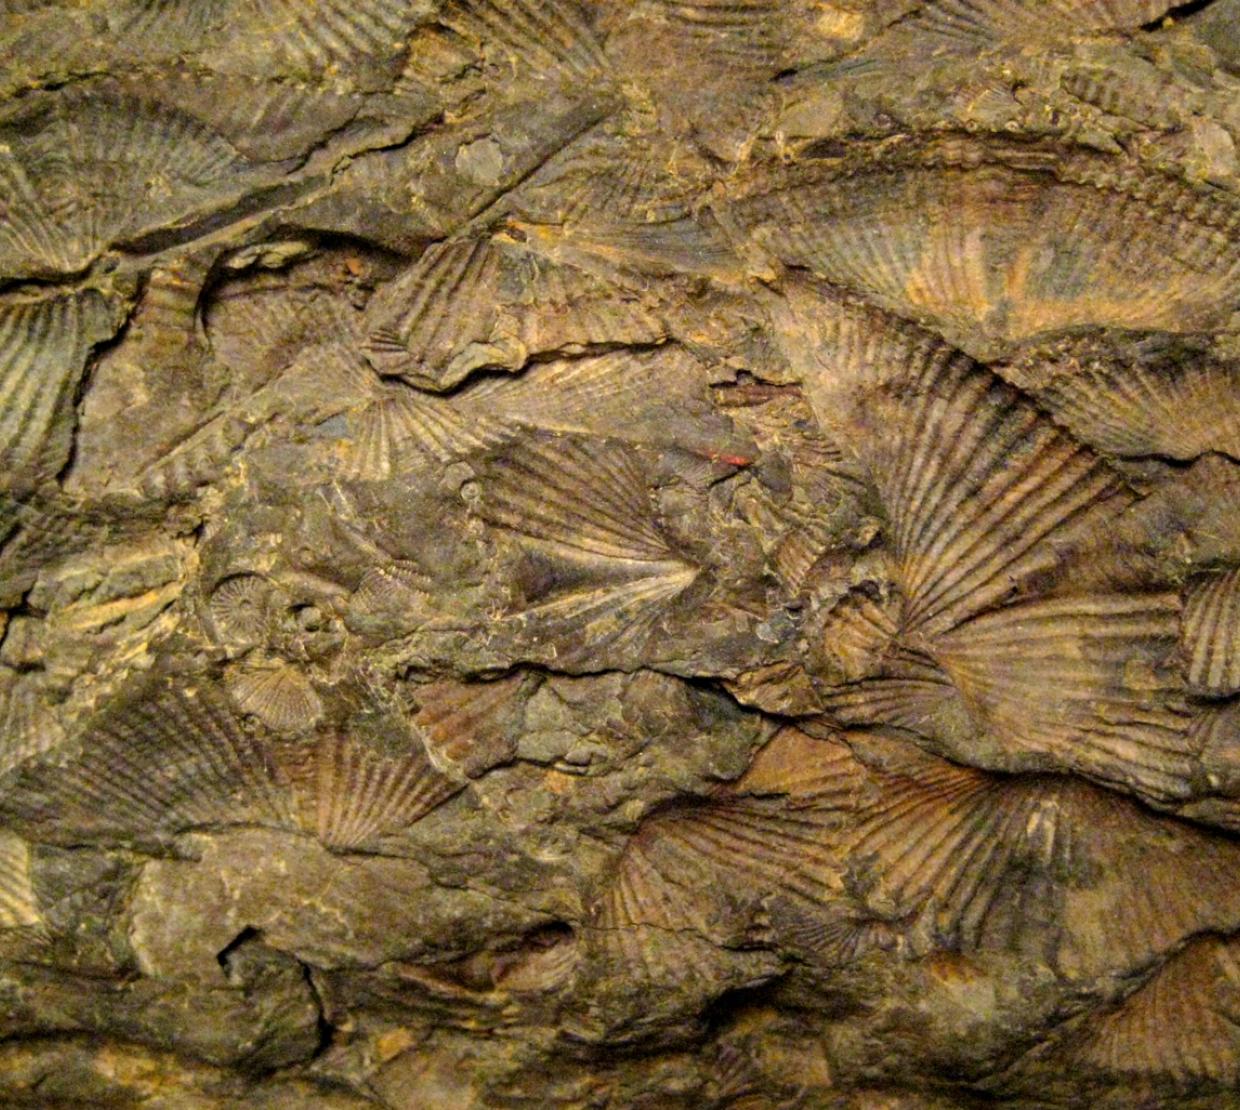 Fossolized brachiopods in shale rock